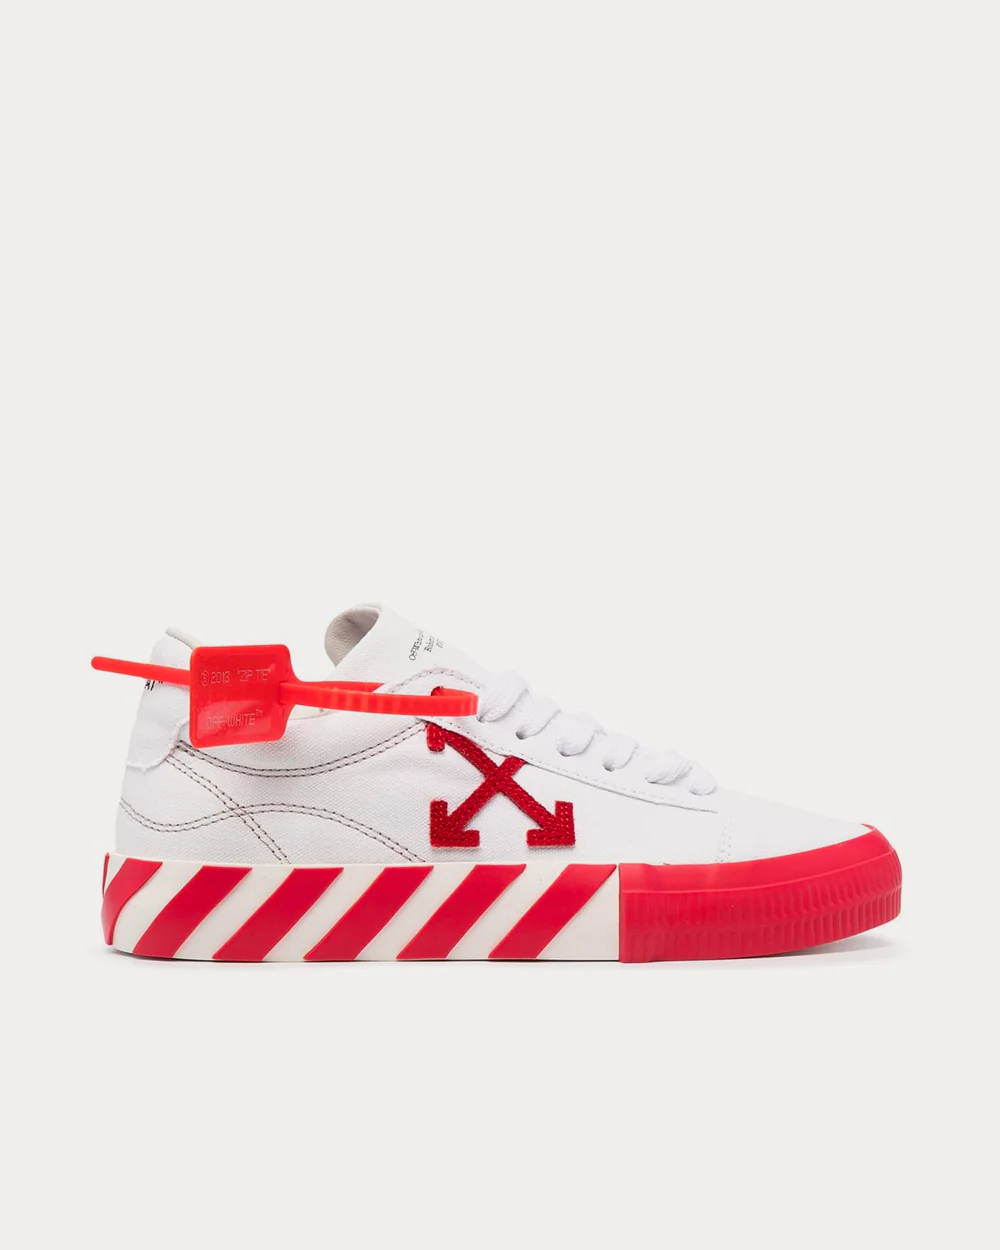 OFF WHITE Vulcanized White / Red Low Top Sneakers - pleasurestore